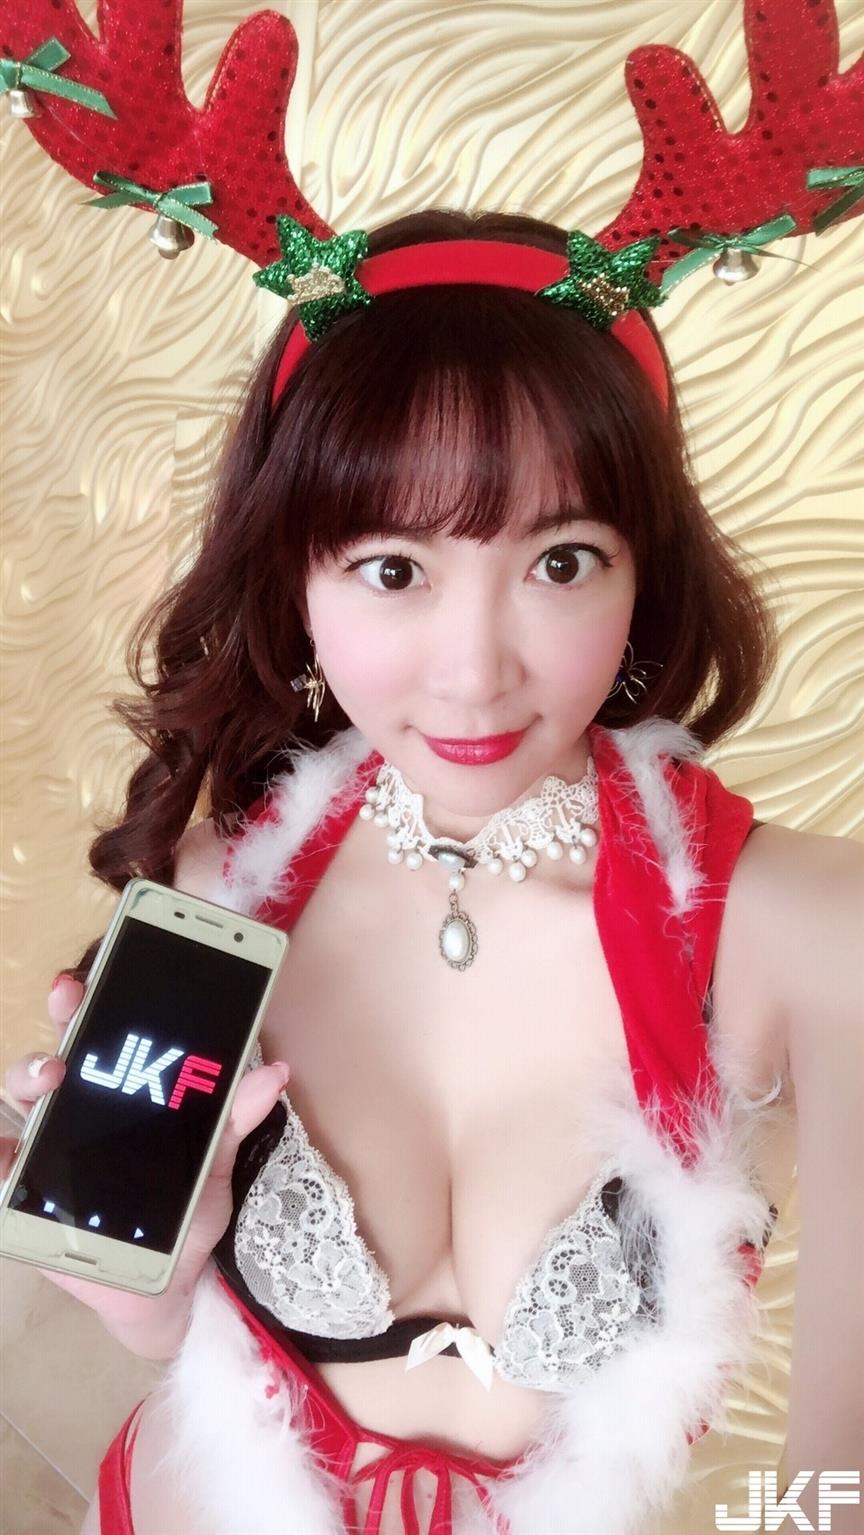 JKF Girl 2018 Happy New Year Gallery - 33.jpg